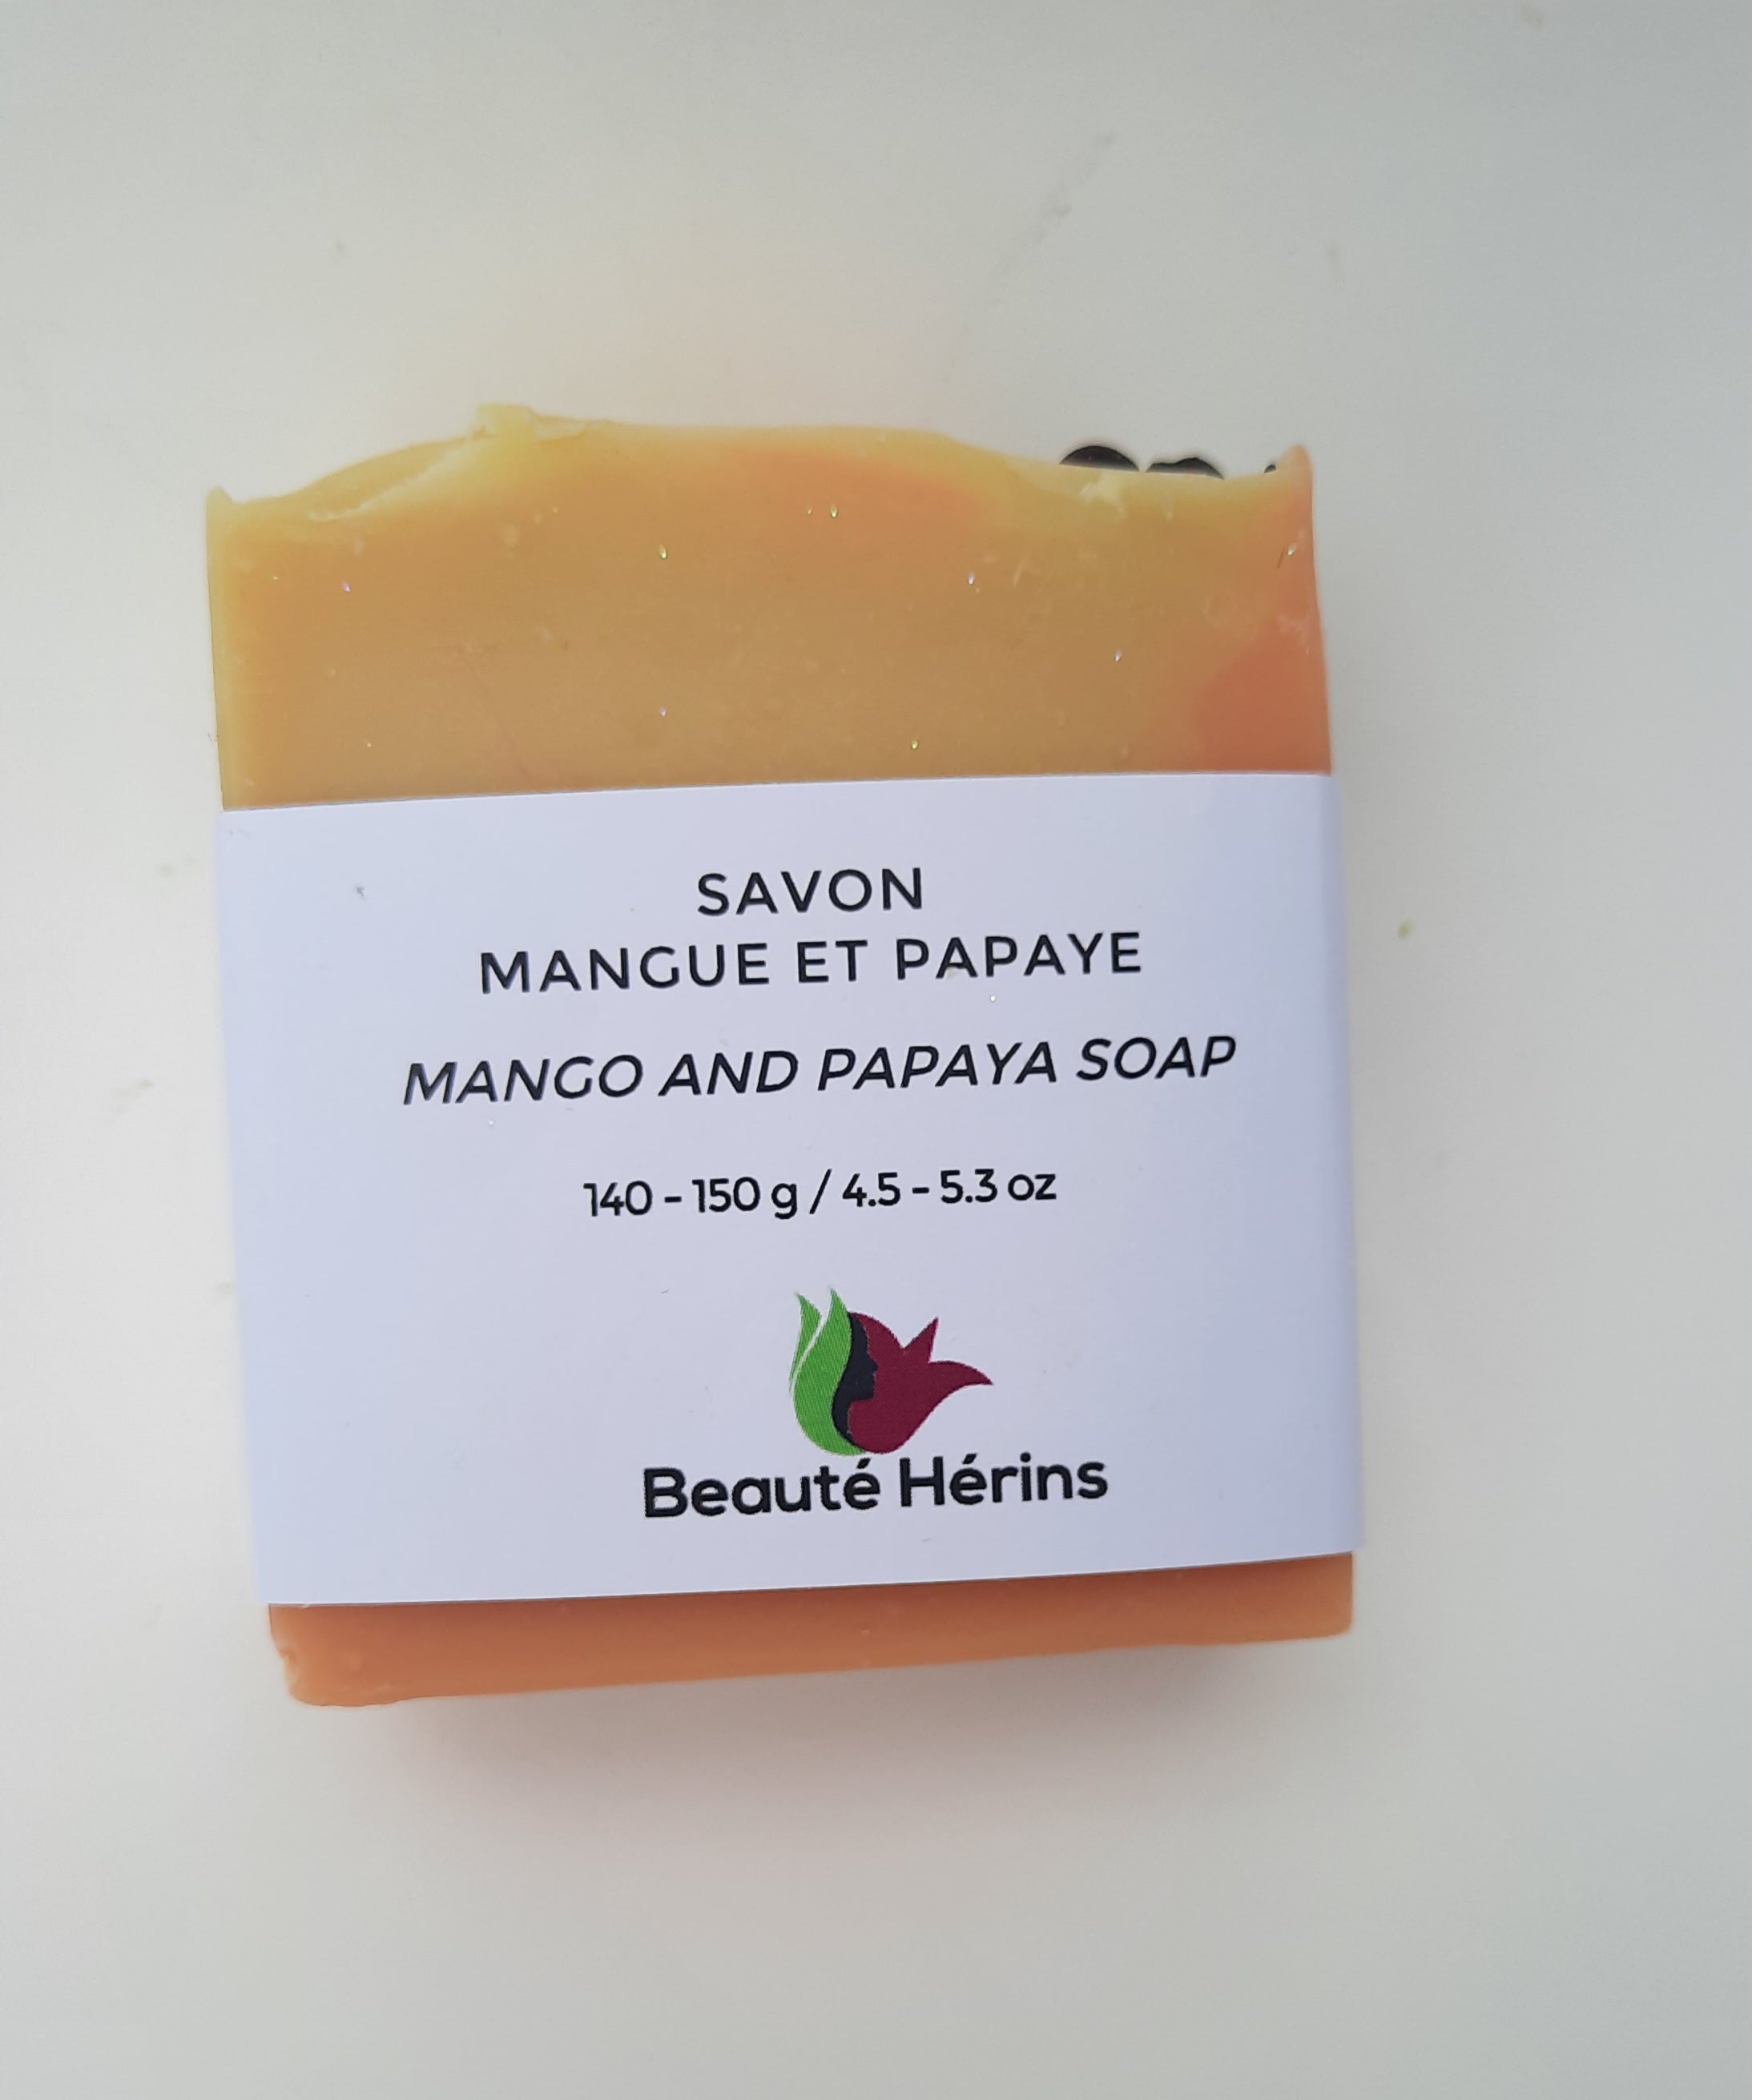 Mango and papaya soap - 140-150g